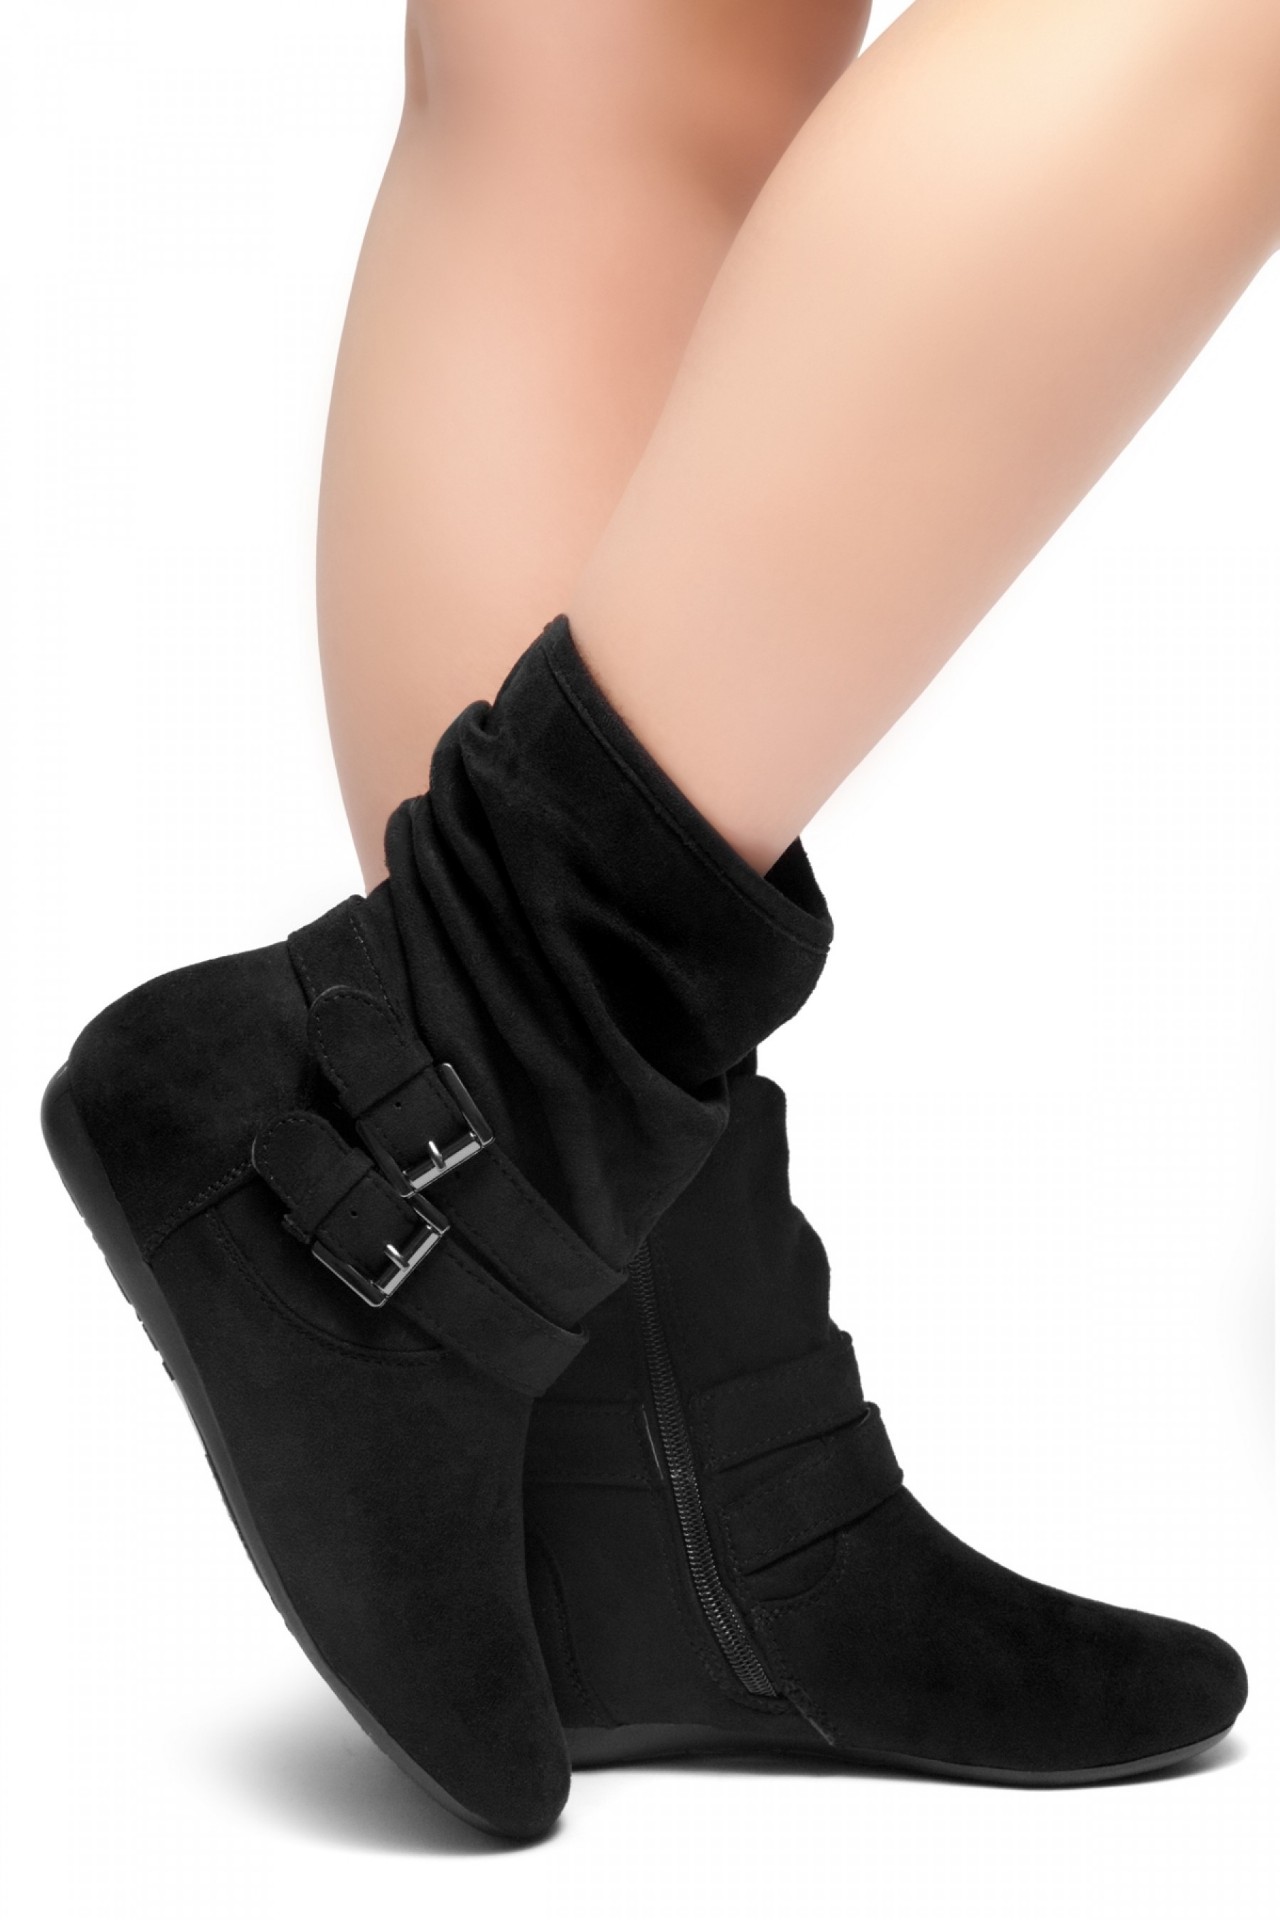 Black Lindell Women's Fashion Calf Flat Heel Side Zipper, double Buckle straps, Slouch Ankle